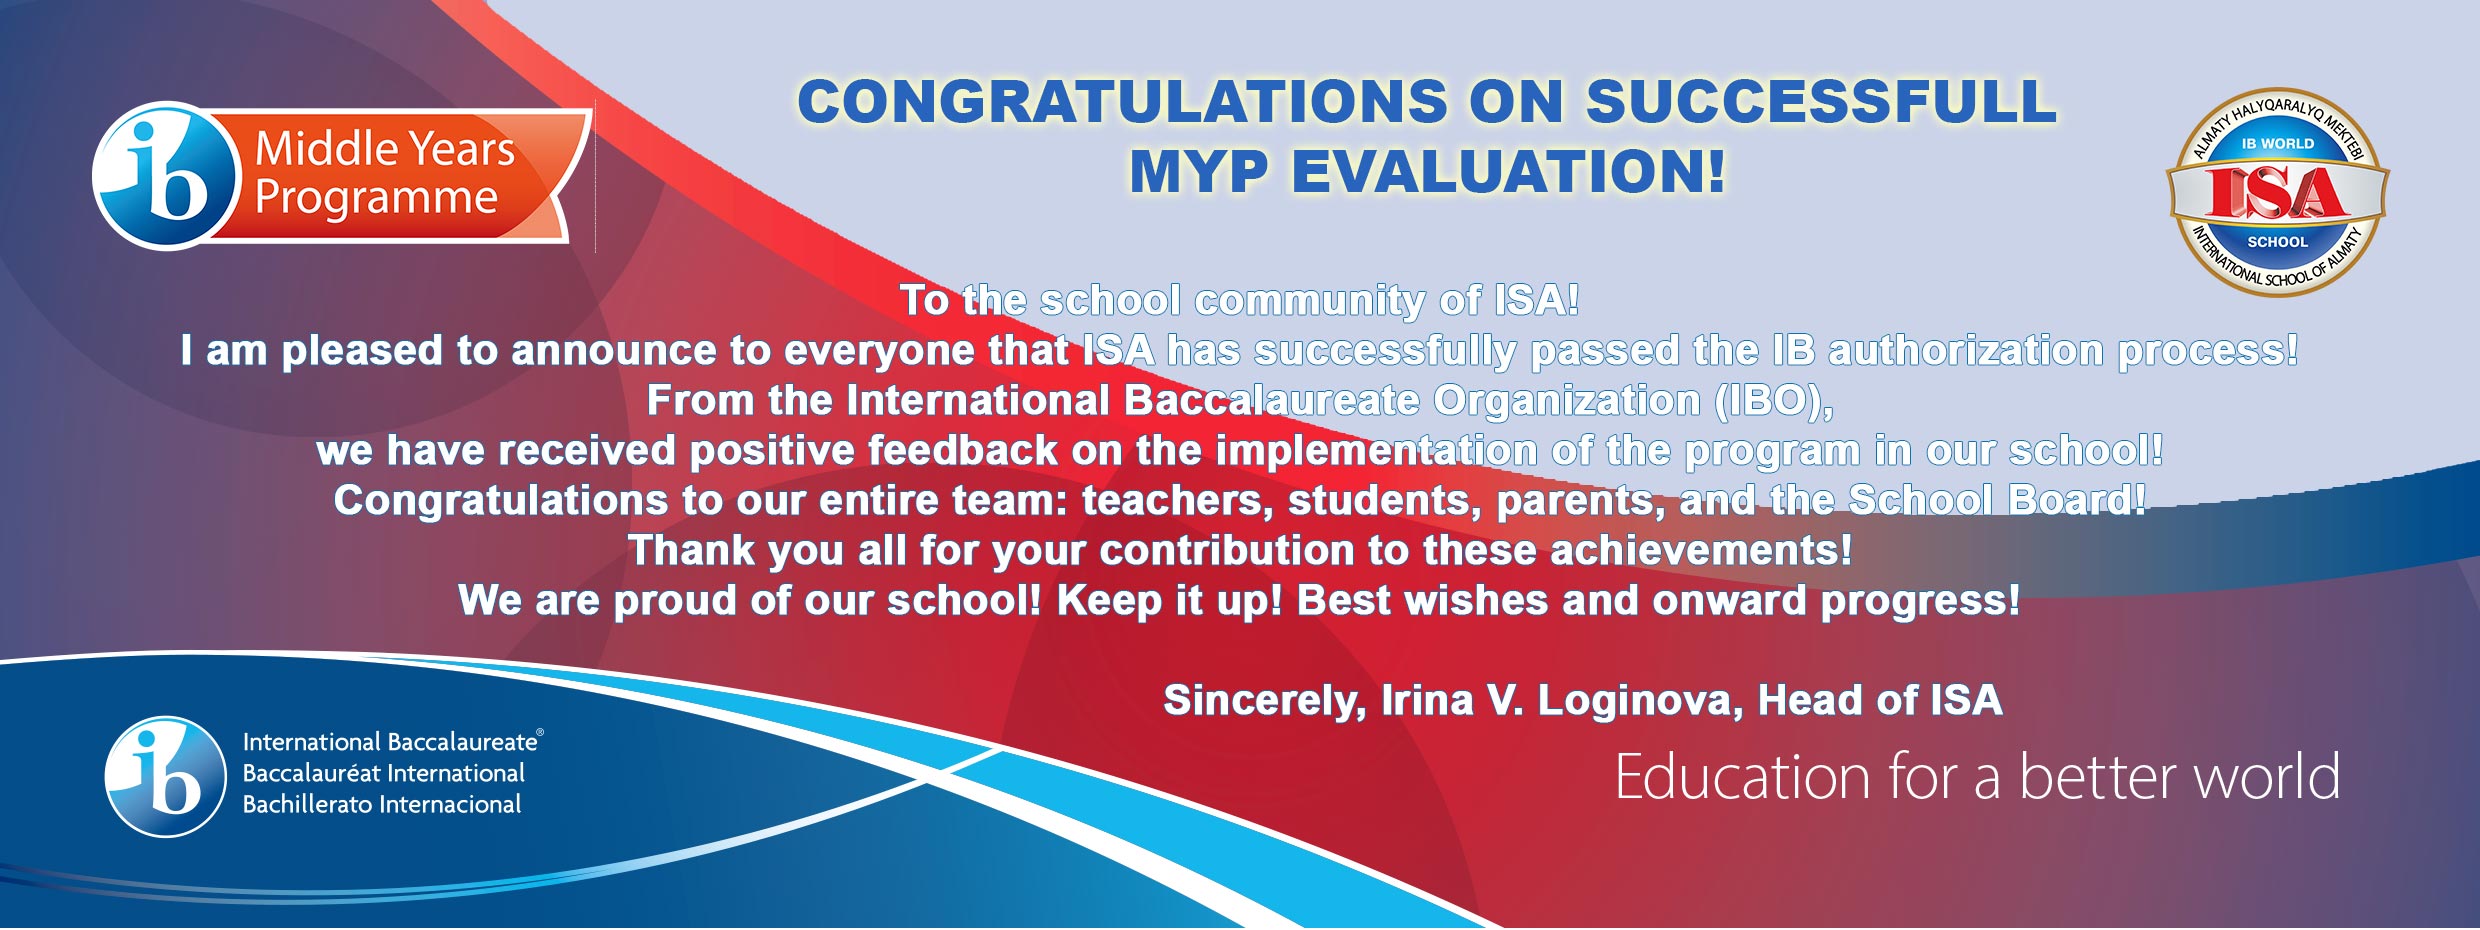 Congratulations on successfull MYP evaluation!